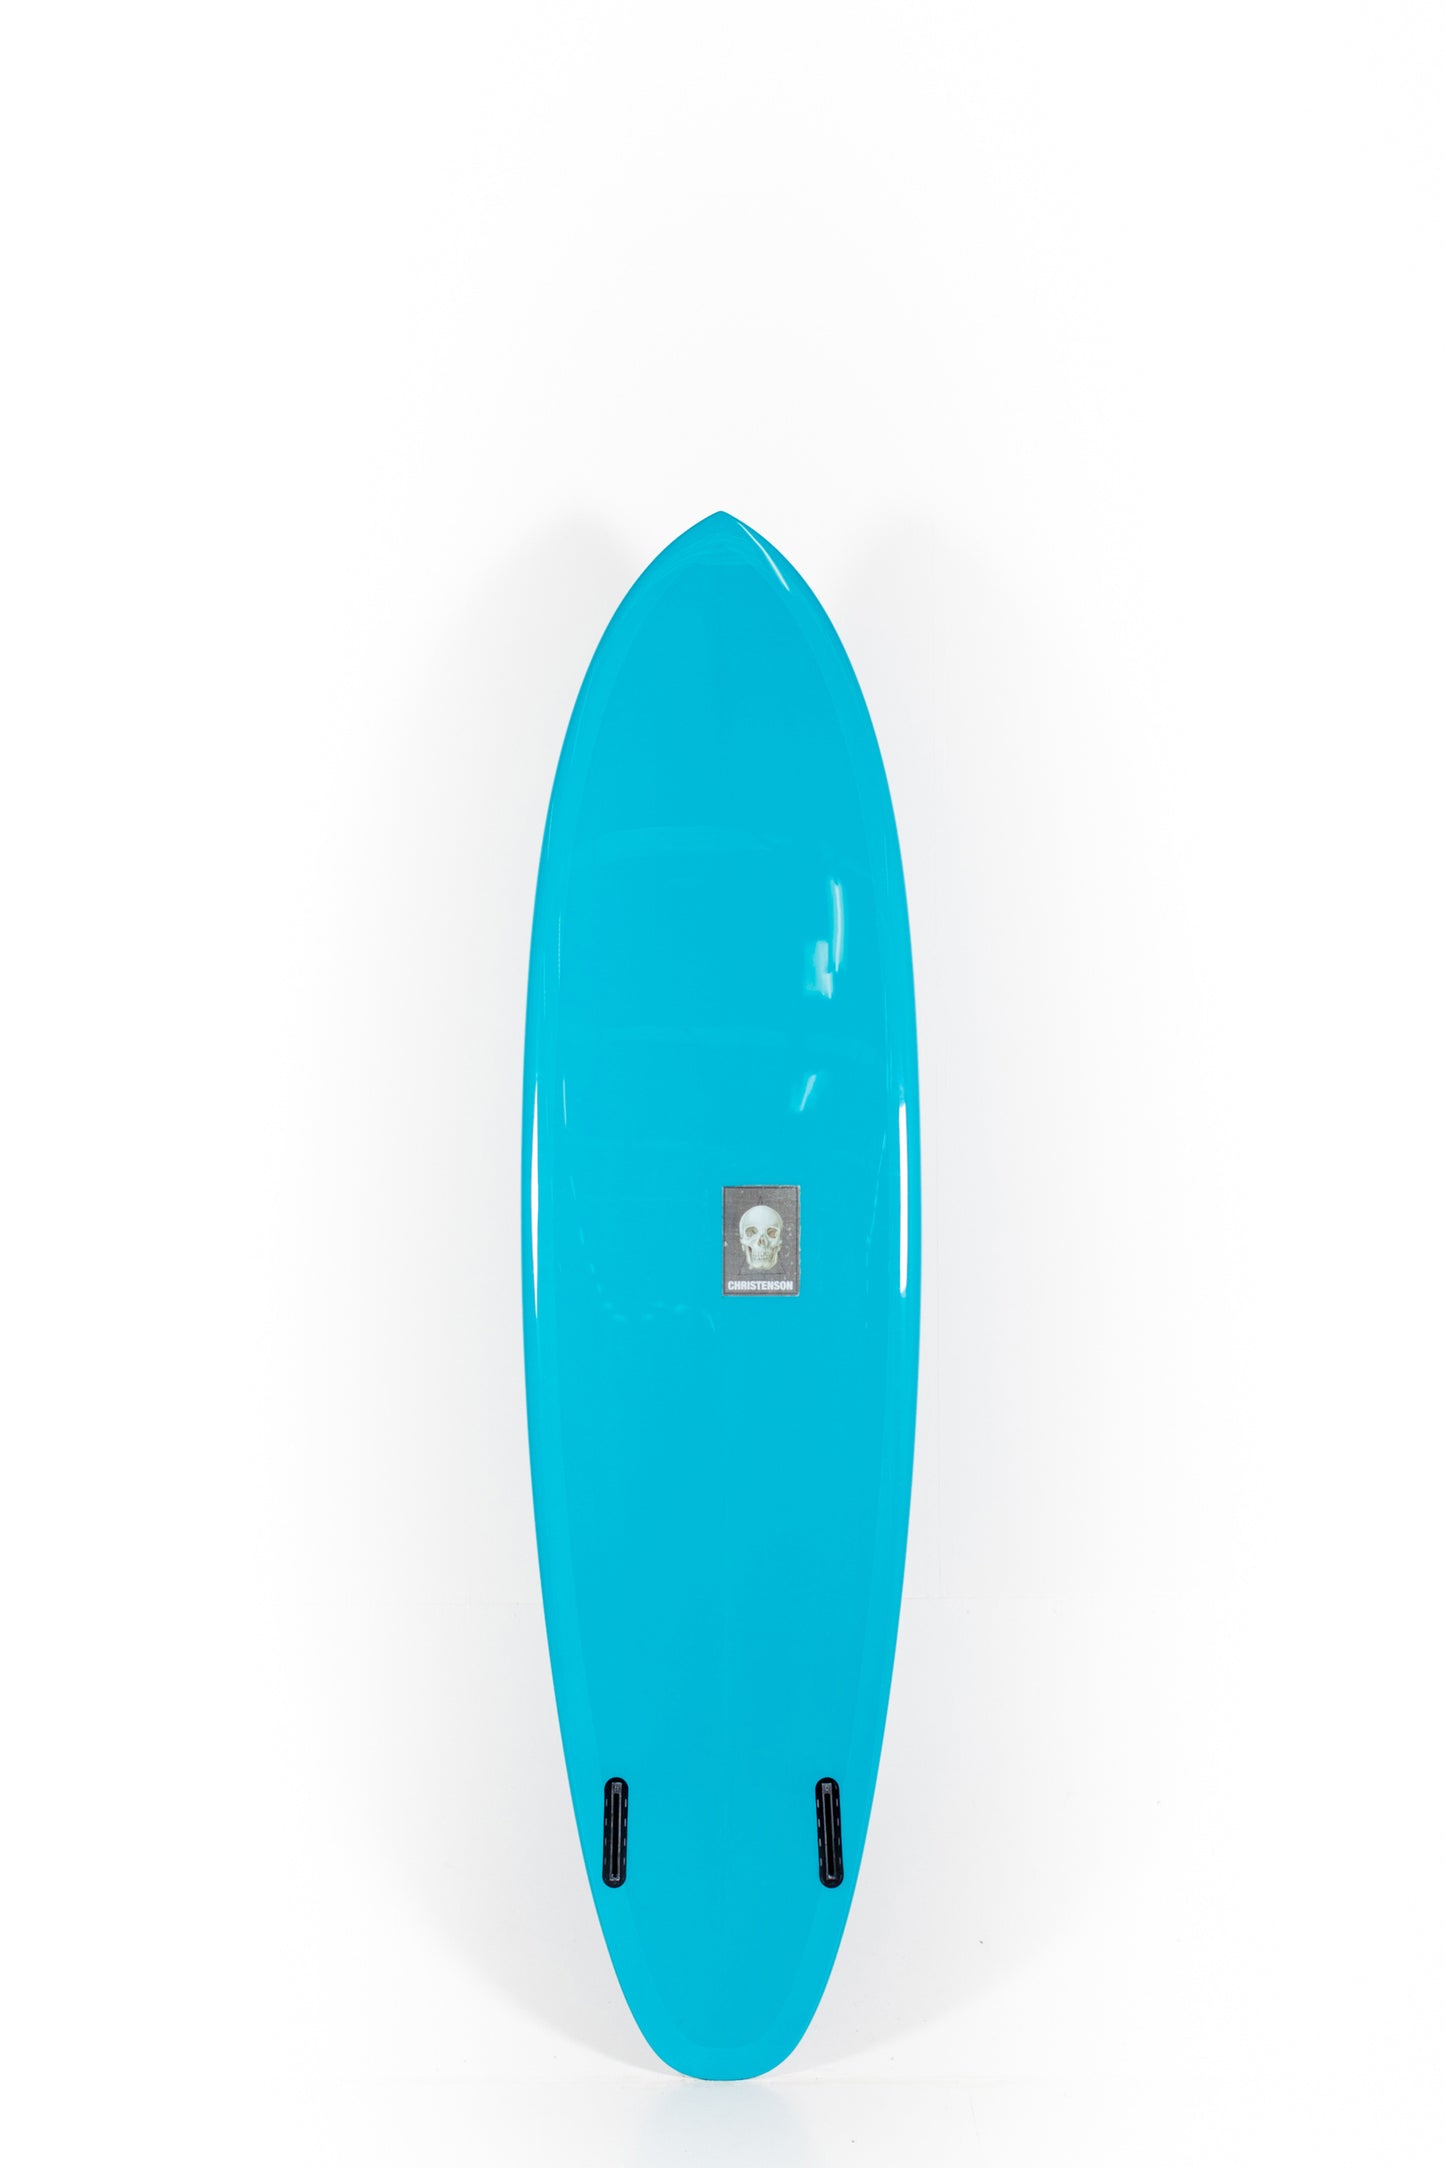 Pukas Surf shop - Christenson Surfboards - TWIN TRACKER - 7'0" x 21 1/4  x 2 7/8 - CX03047